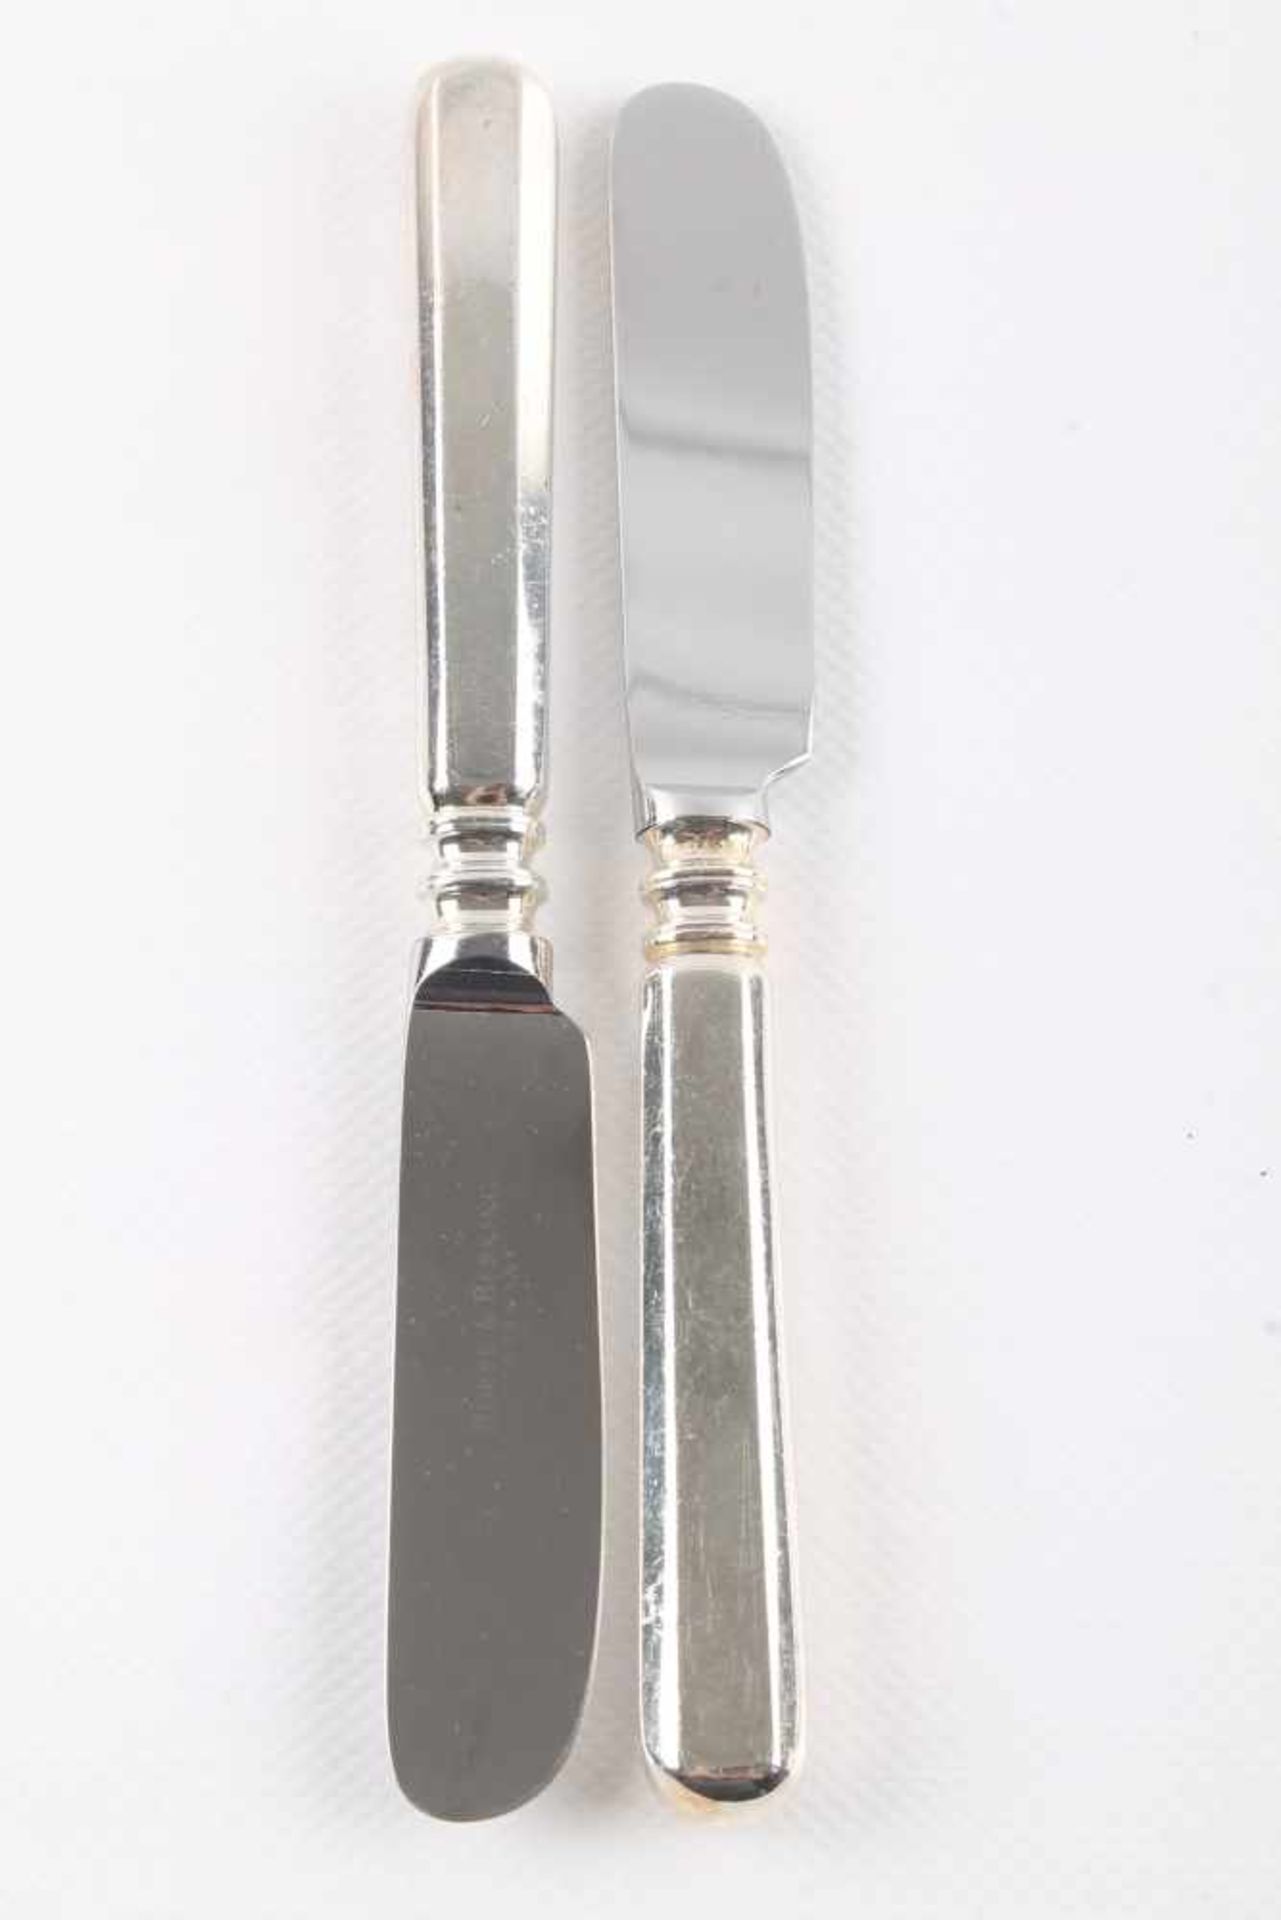 Robbe & Berking Spaten - 12 Messer, 12 knifes, - Image 2 of 4